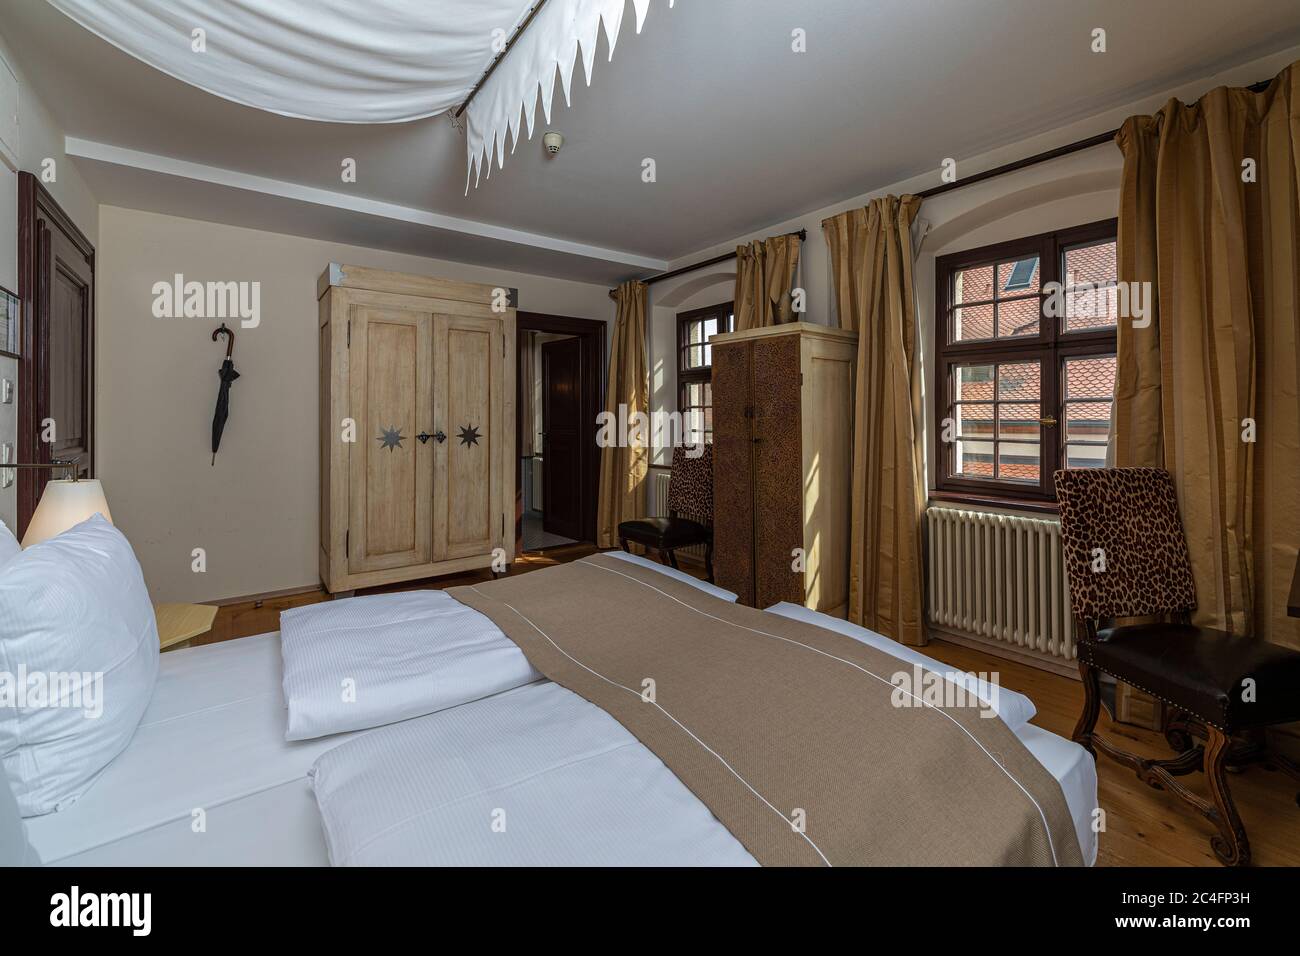 Interior view of deluxe hotel room in german castle Stock Photo